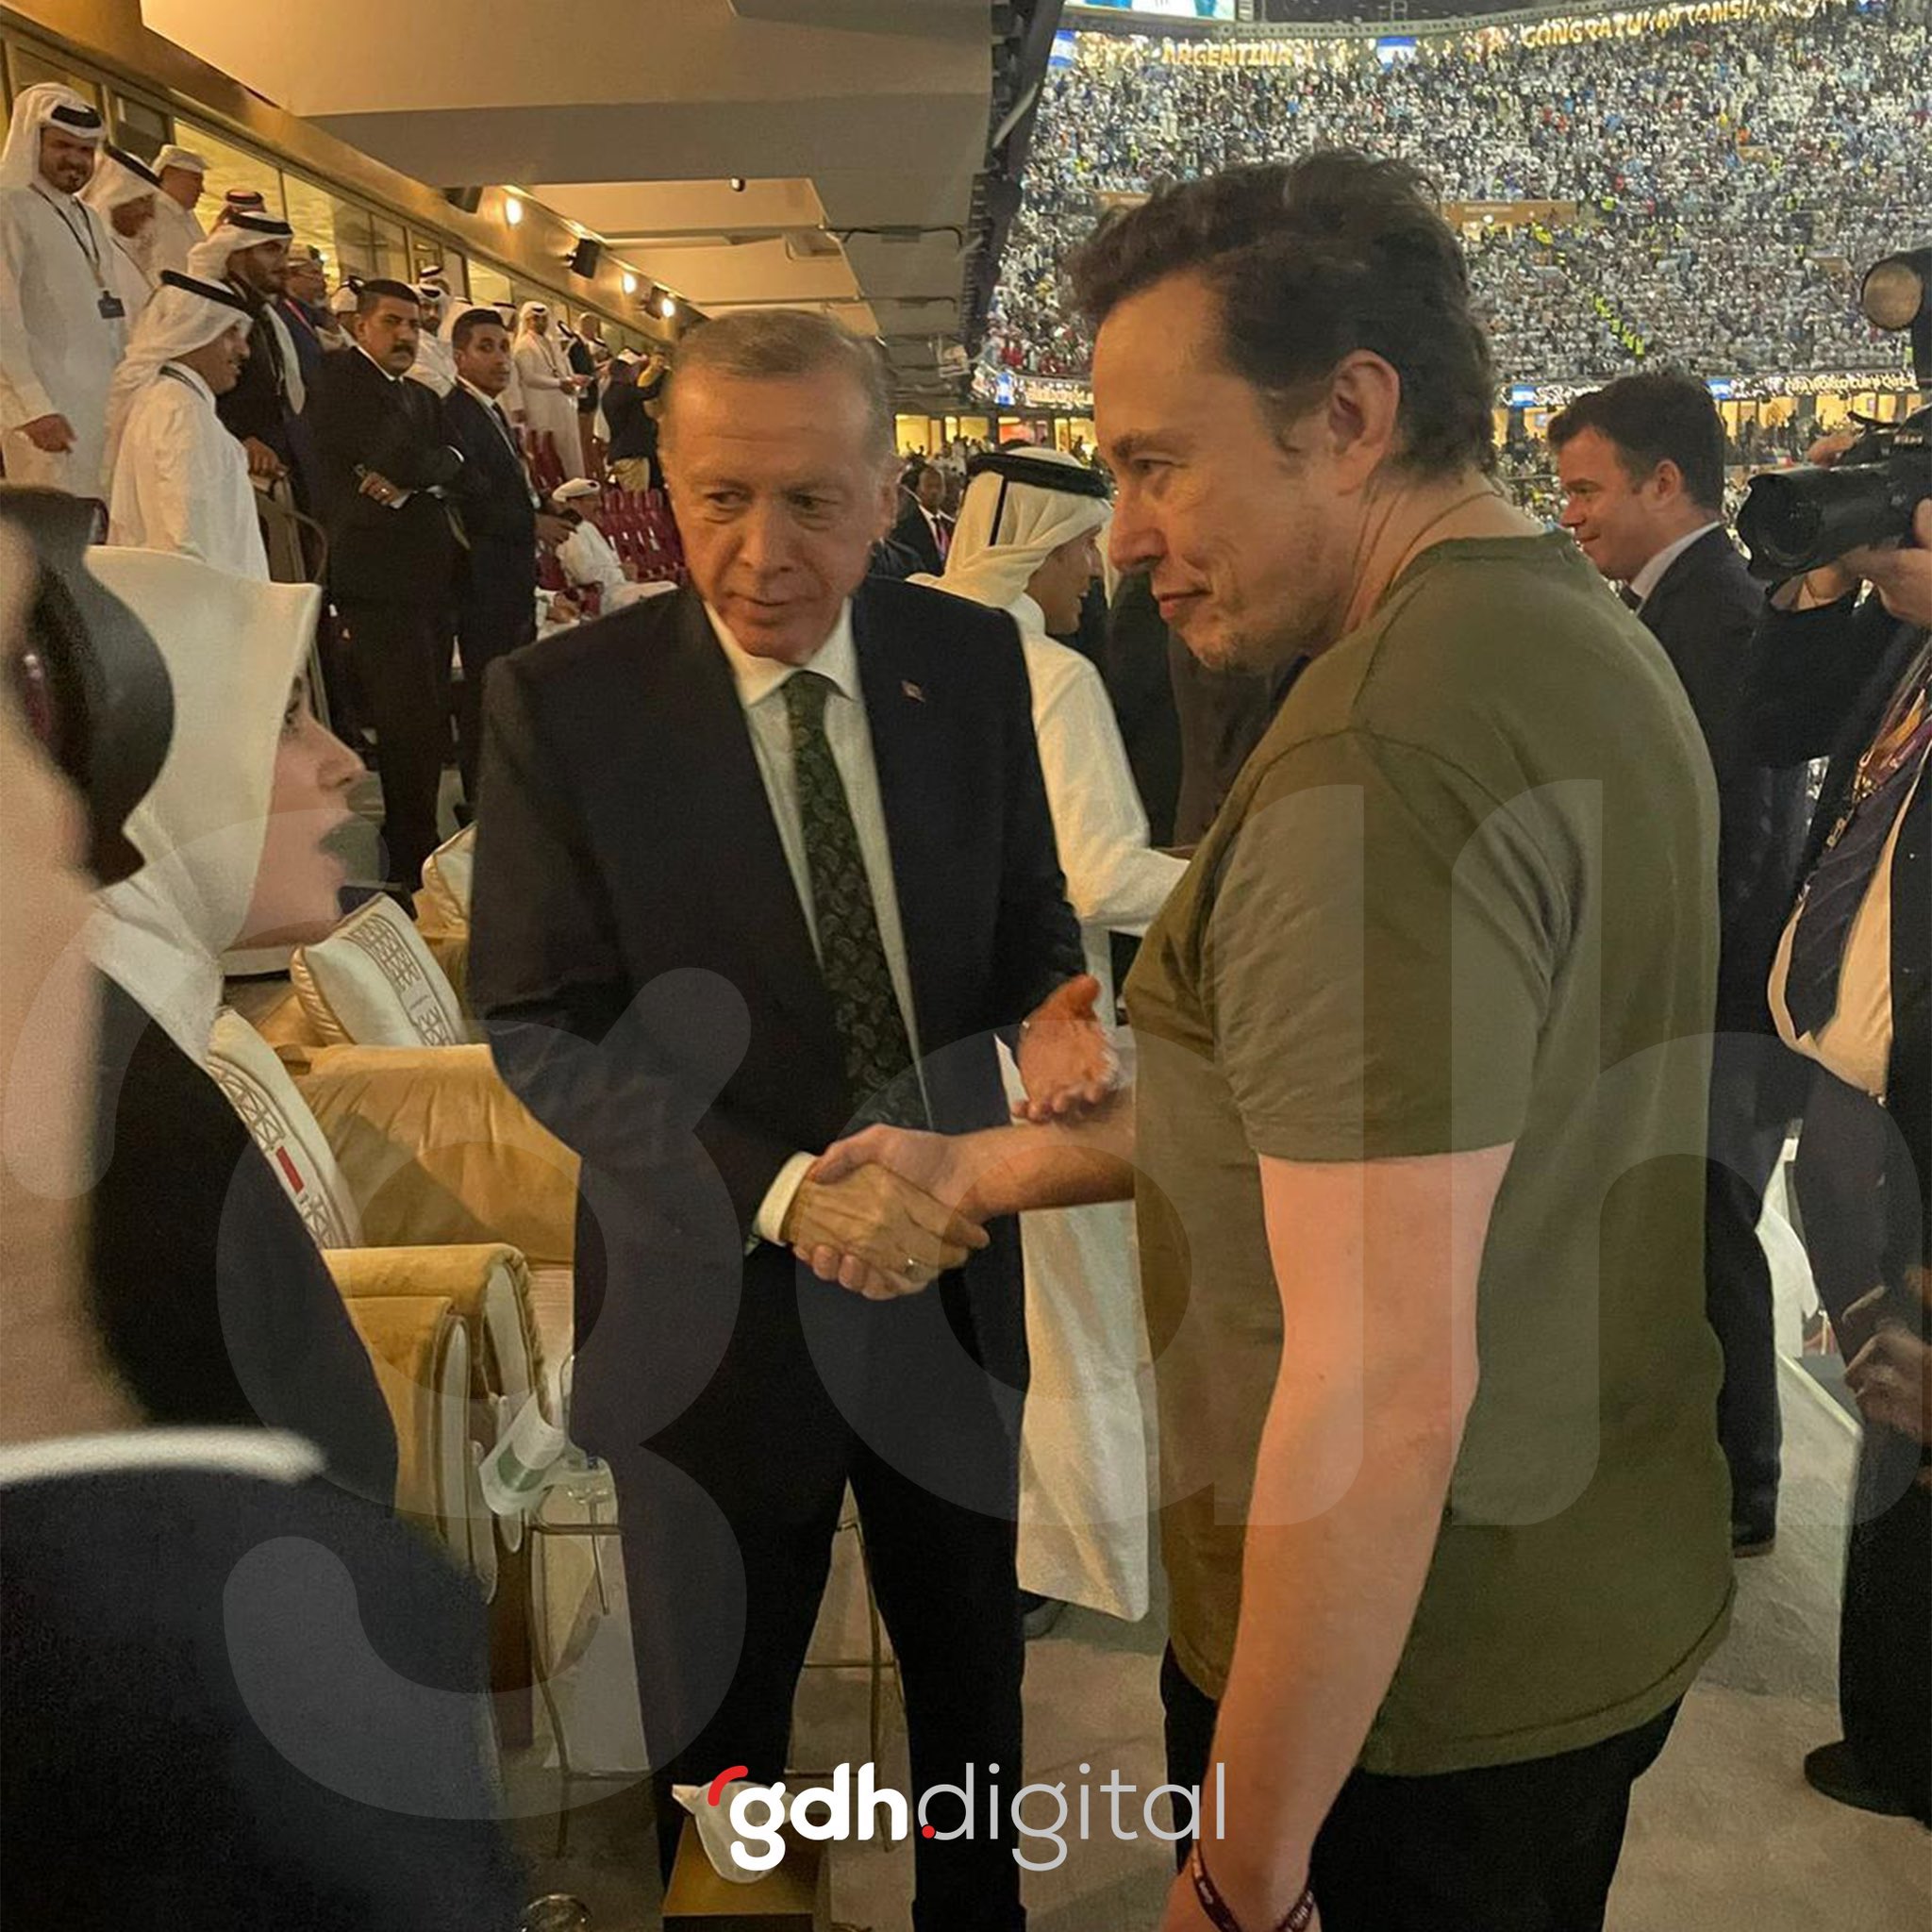 Ragıp Soylu on Twitter: "Erdogan and Elon Musk shake hands in Doha during  the World Cup Final Match https://t.co/eKqr9sDelD" / Twitter